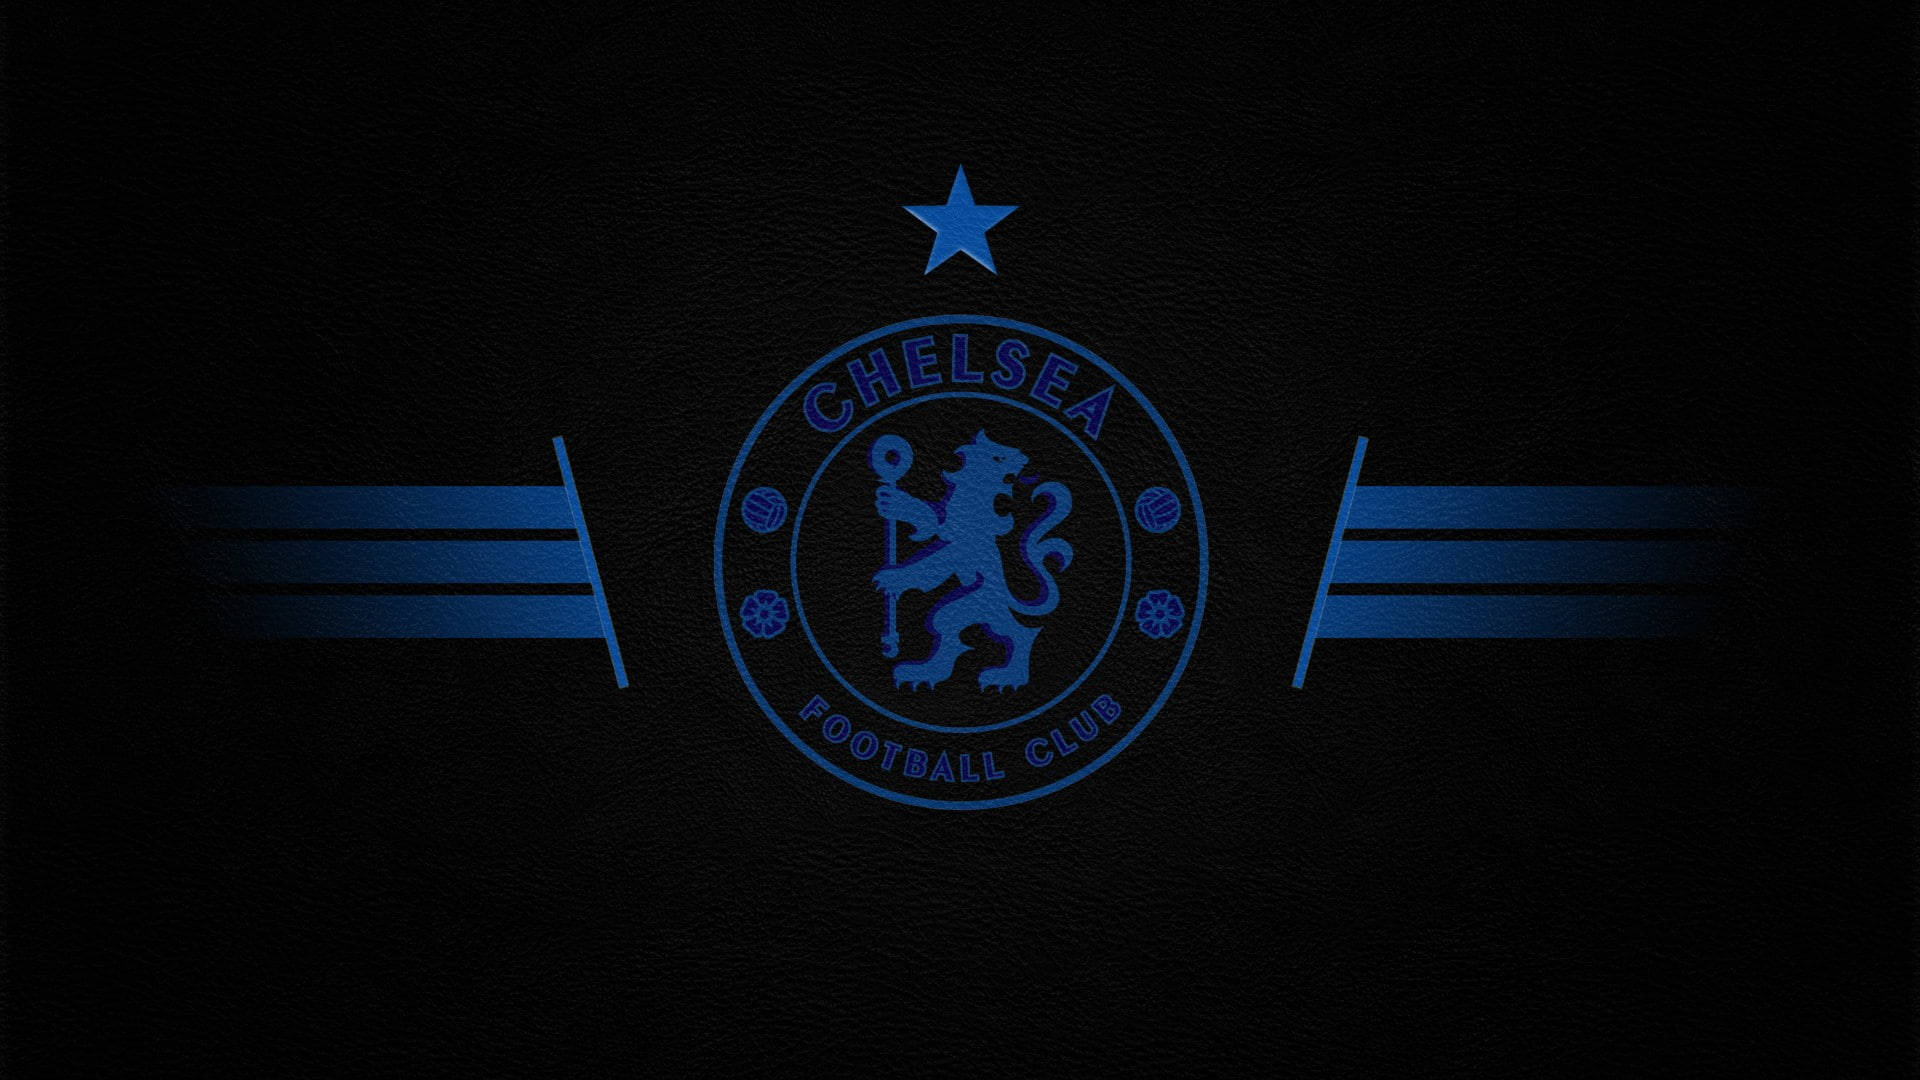 Football Club Chelsea Fc Logo Wallpaper